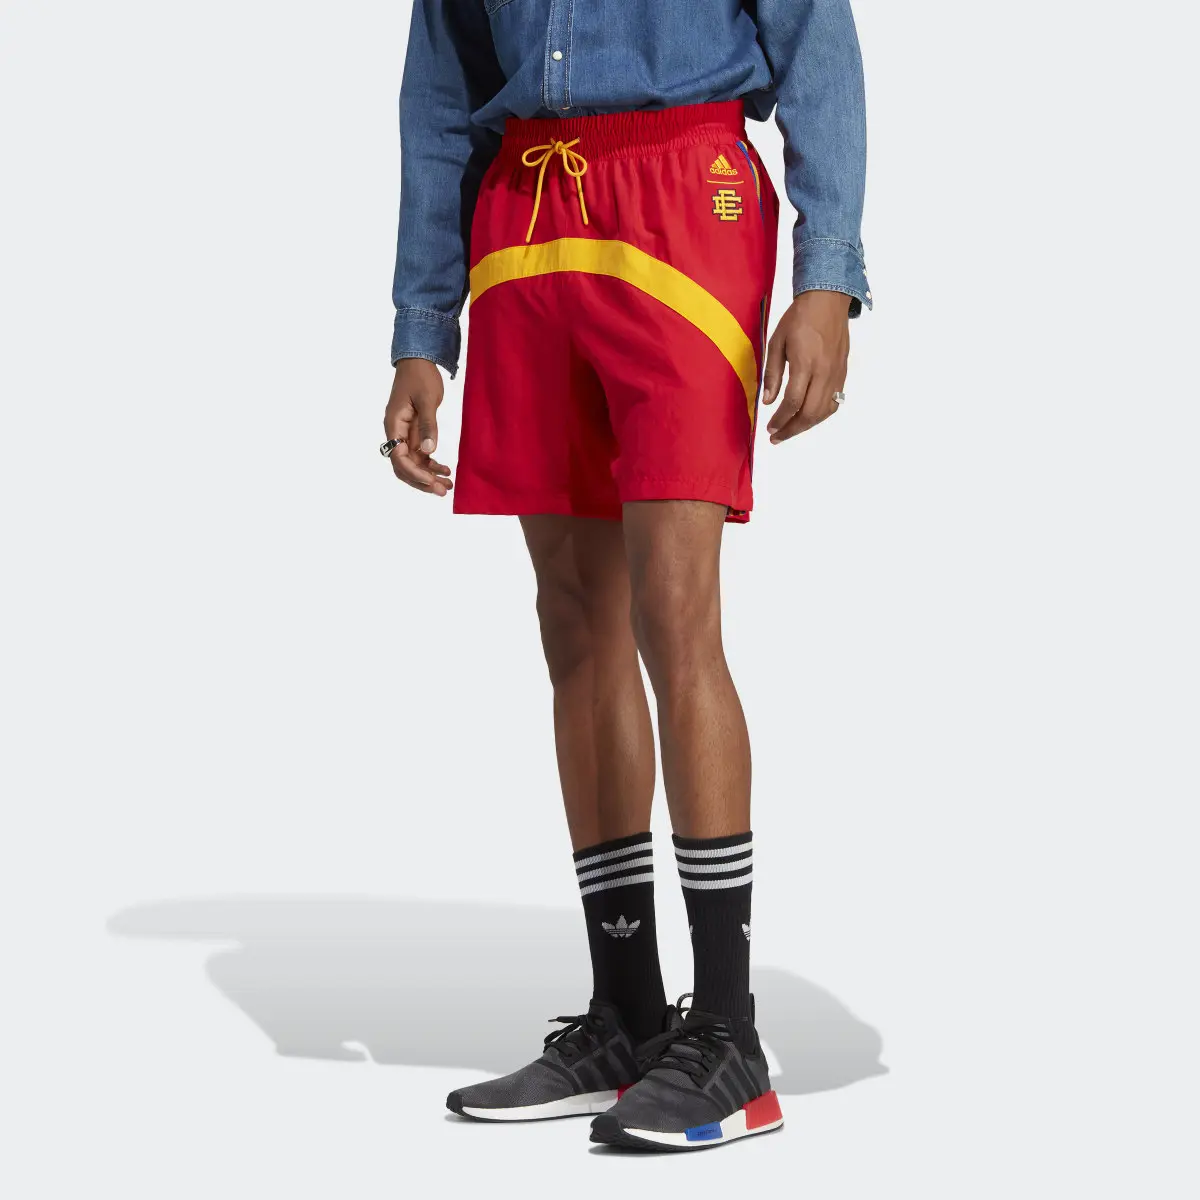 Adidas Eric Emanuel McDonald's Shorts. 1